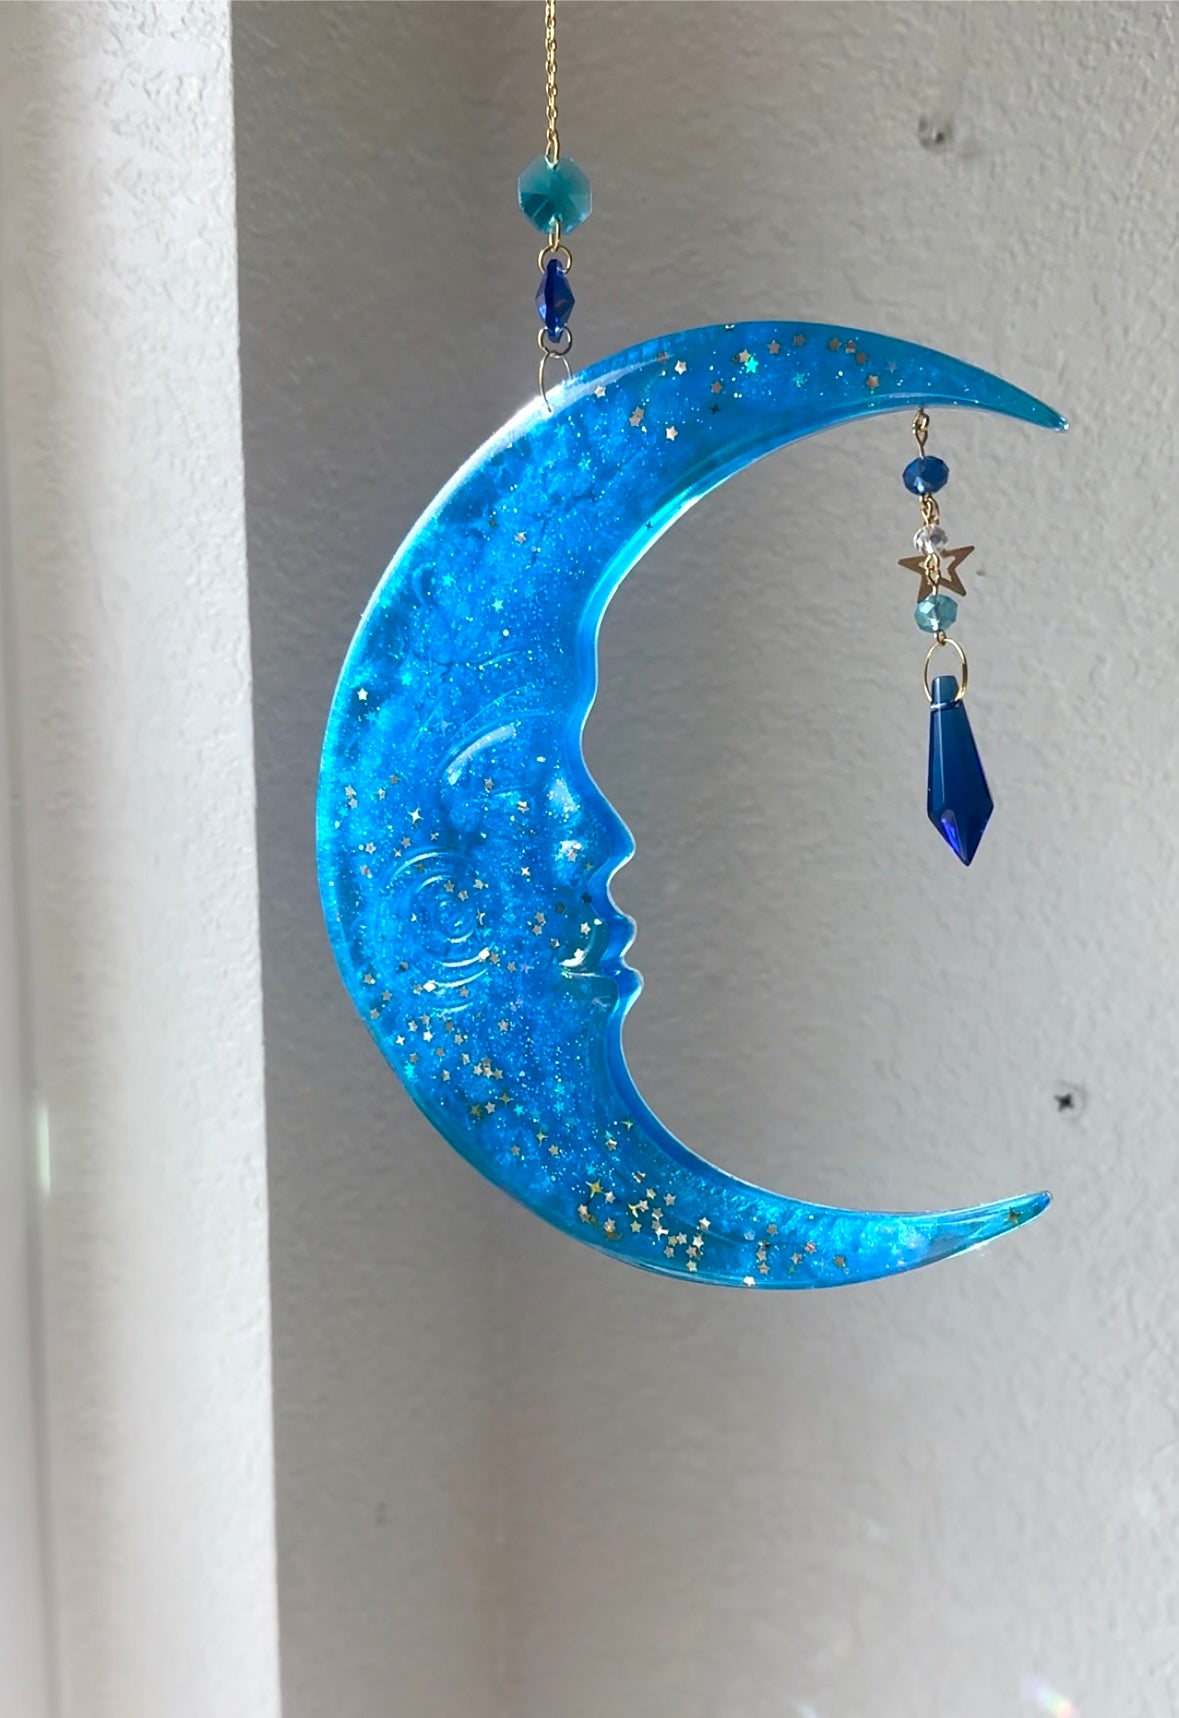 Celestial moon face wall hang/sun-catcher